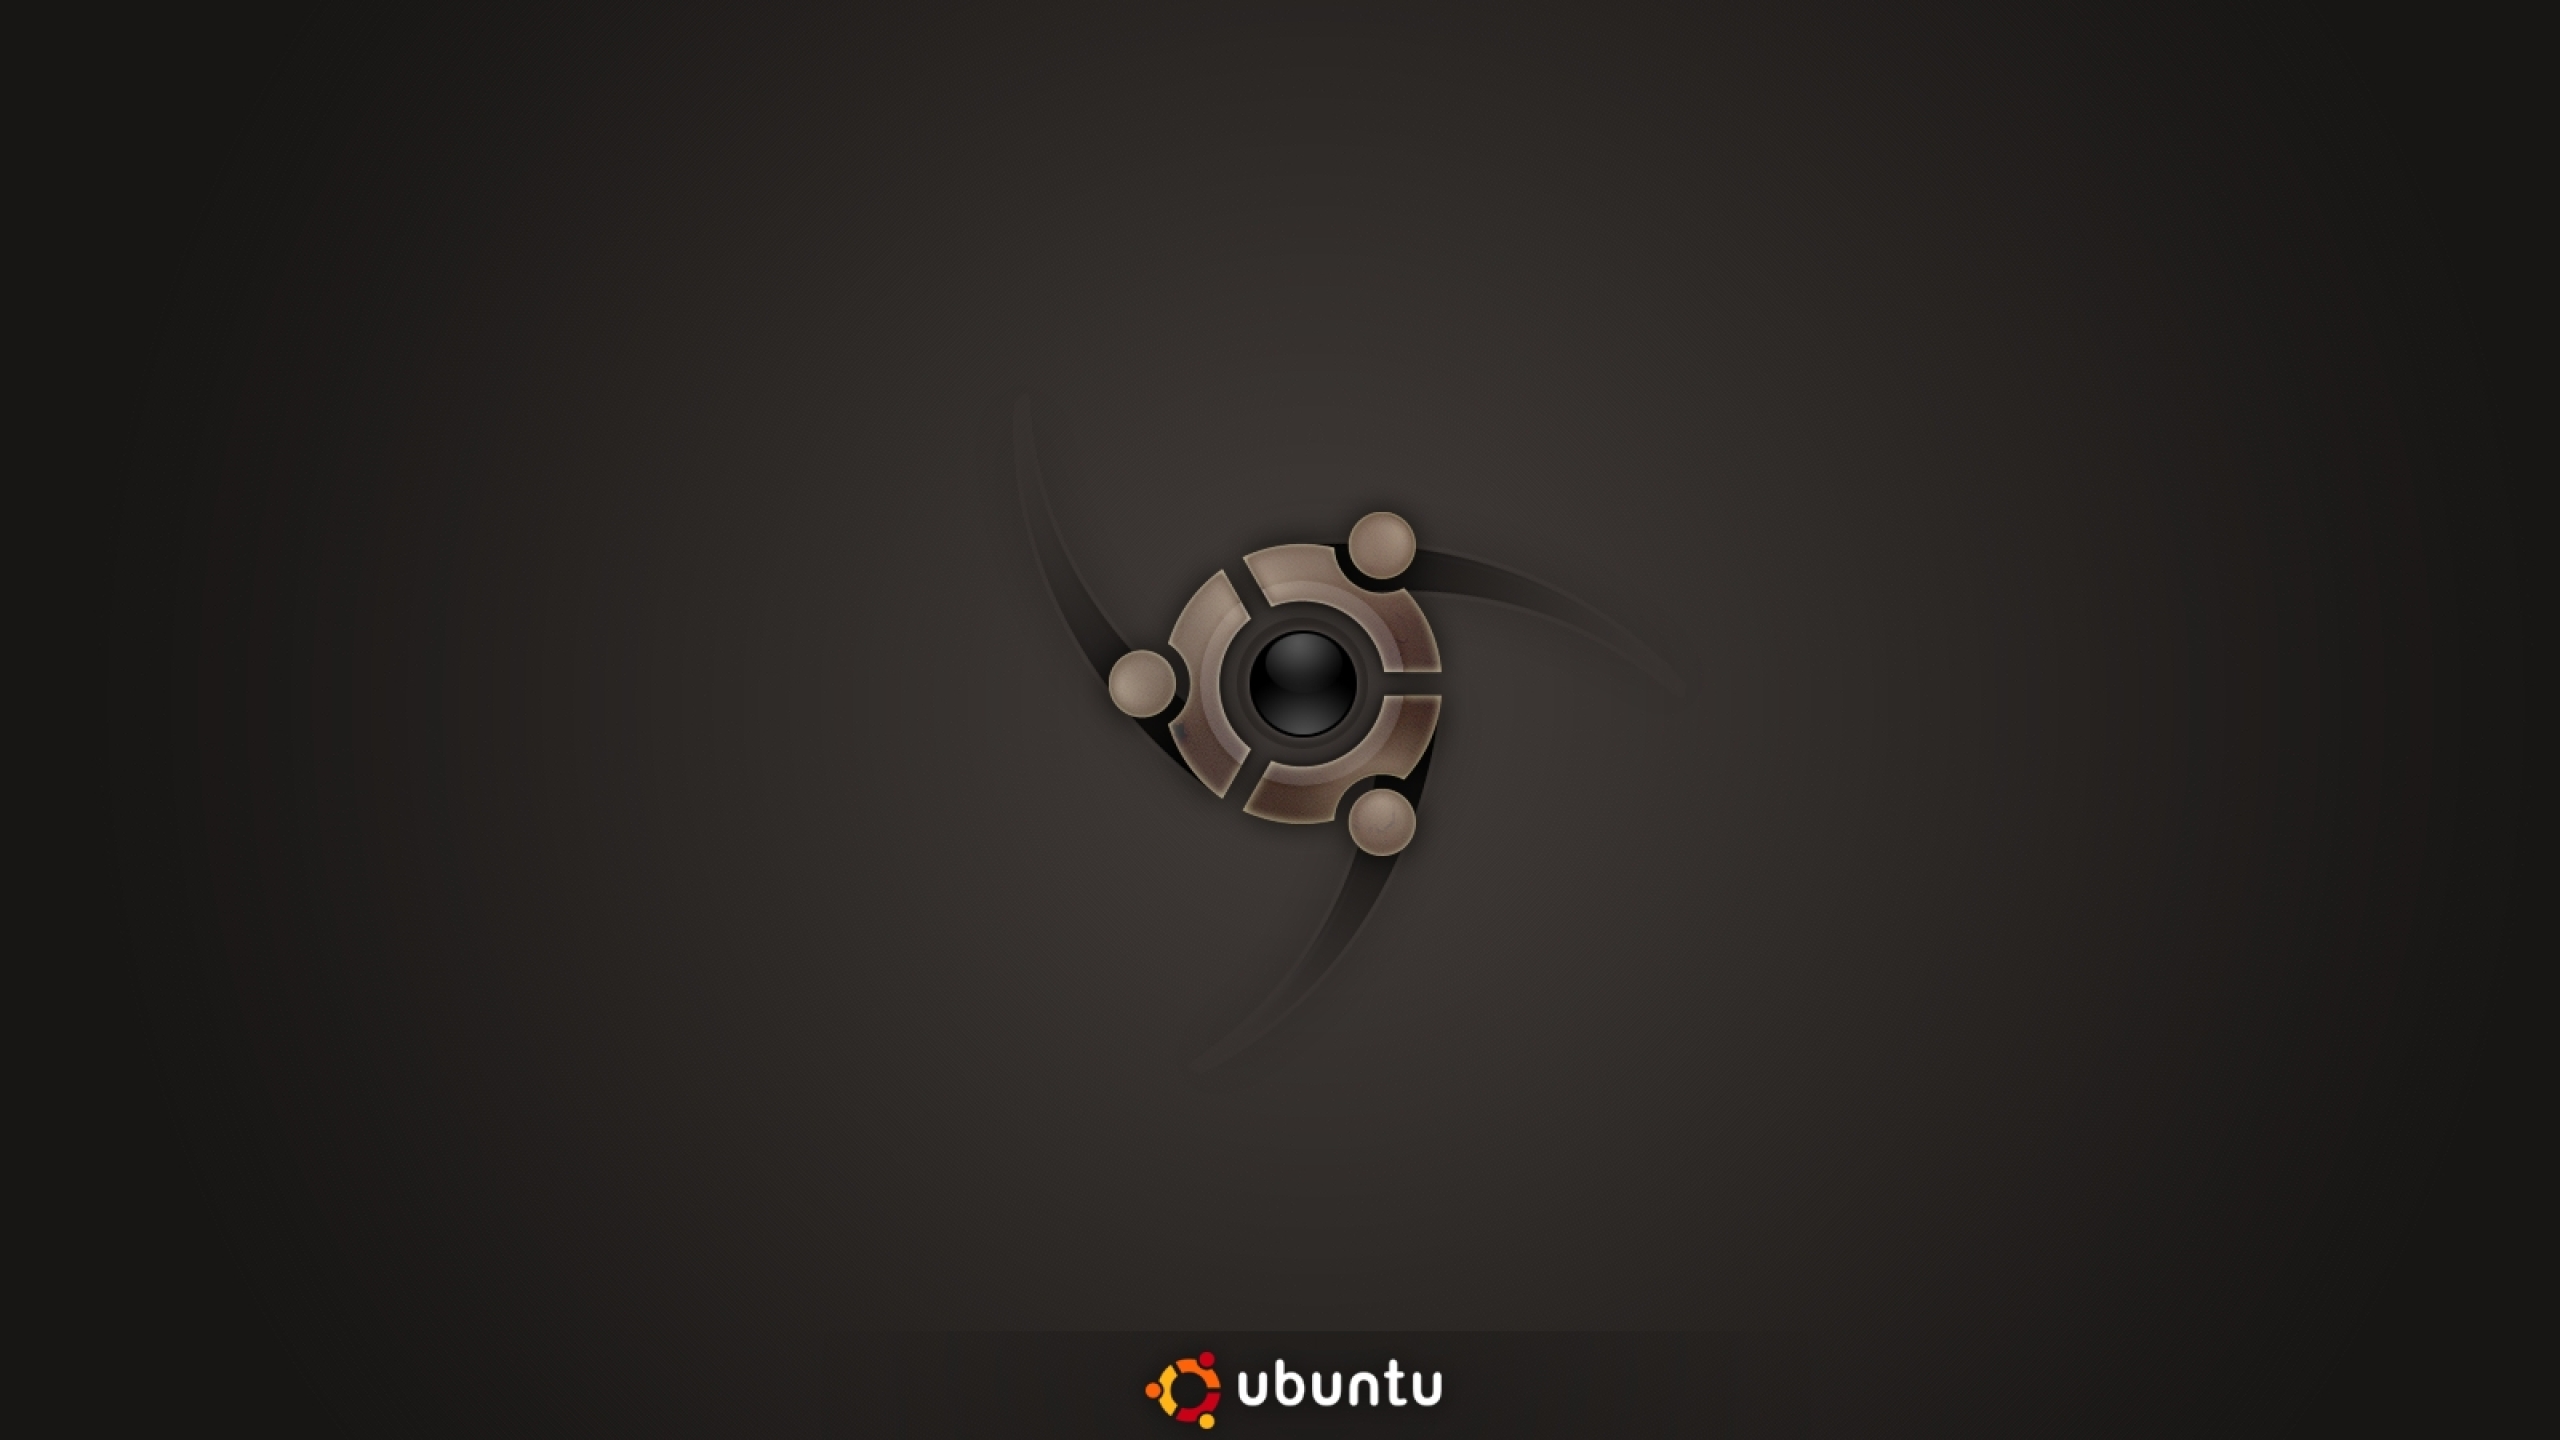 2560x1440 Ubuntu Linux Debian 1440p Resolution Wallpaper Hd Hi Tech 4k Wallpapers Images Photos And Background